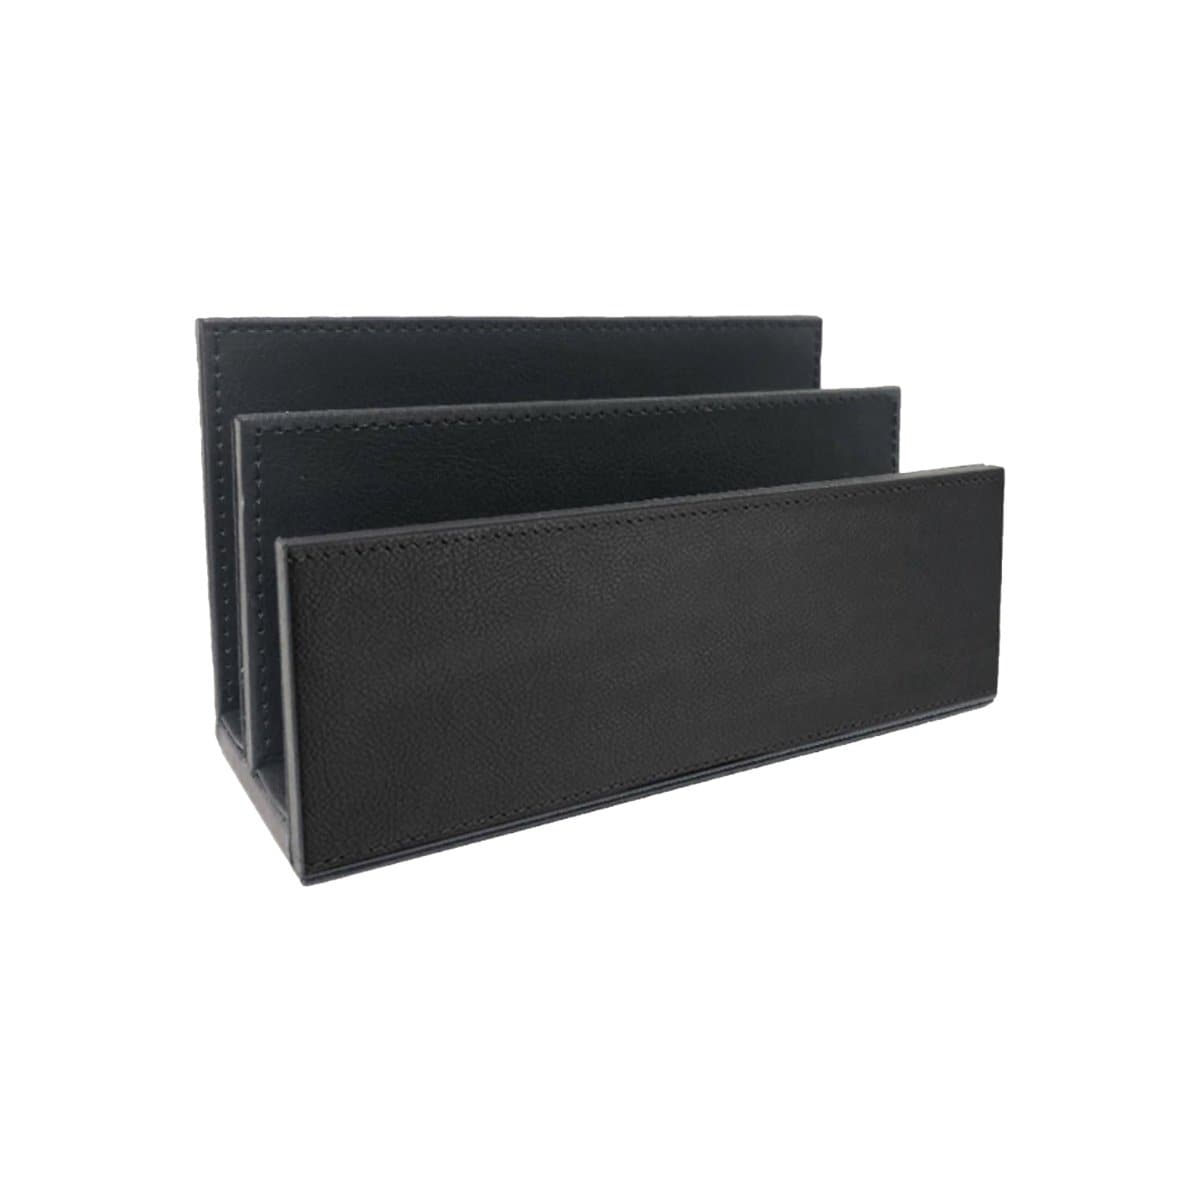 Konrad S. Desk Letter Rack, 18 x 7.5 x D10cm, PU Leather, Black